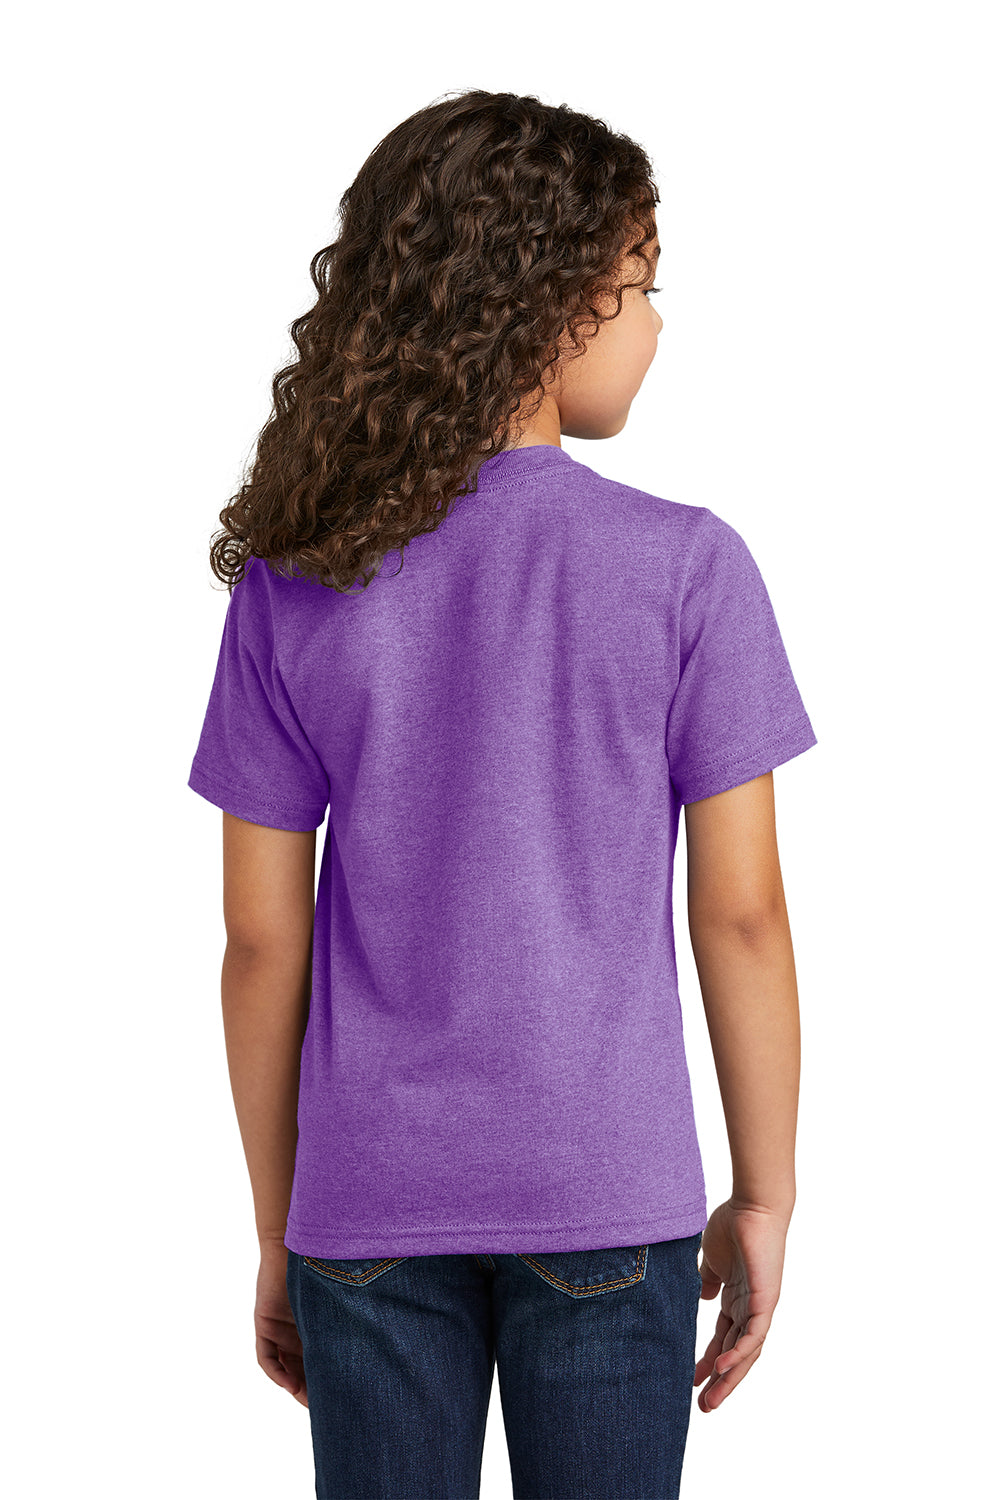 Port & Company PC330Y Youth Short Sleeve Crewneck T-Shirt Heather Team Purple Back